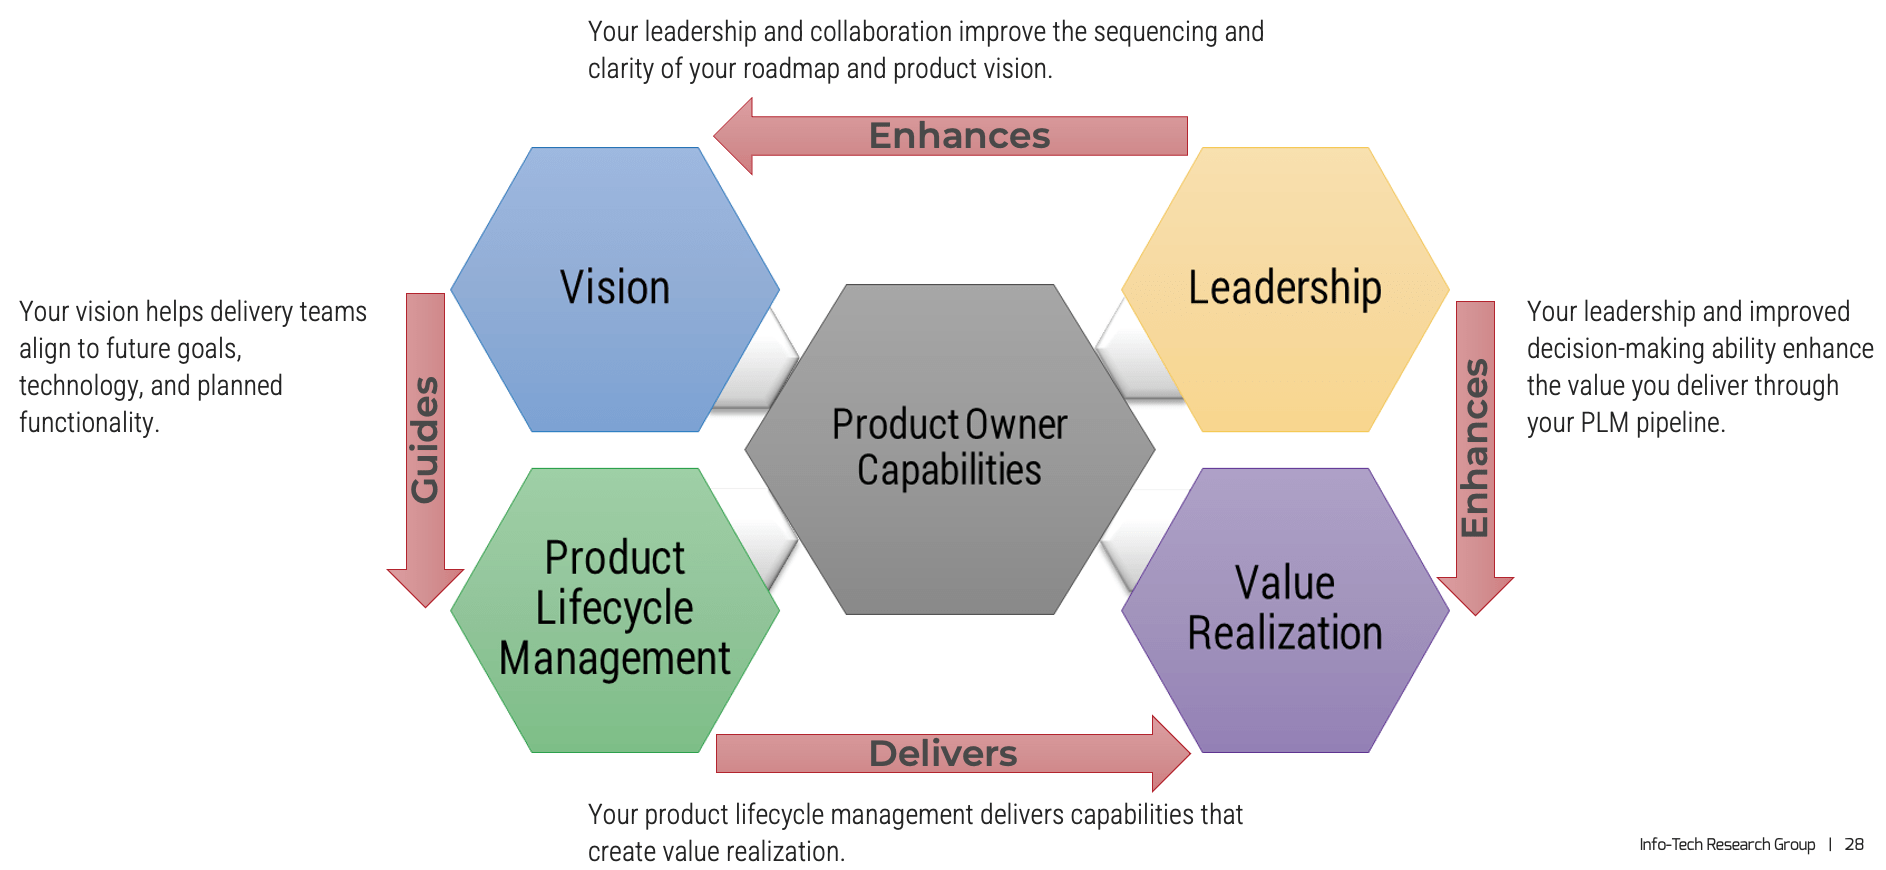 Leadership enhances Vision. Vision Guides Product Lifecycle Management. Product Lifecycle Management delivers Value Realization. Leadership enhances Value Realization